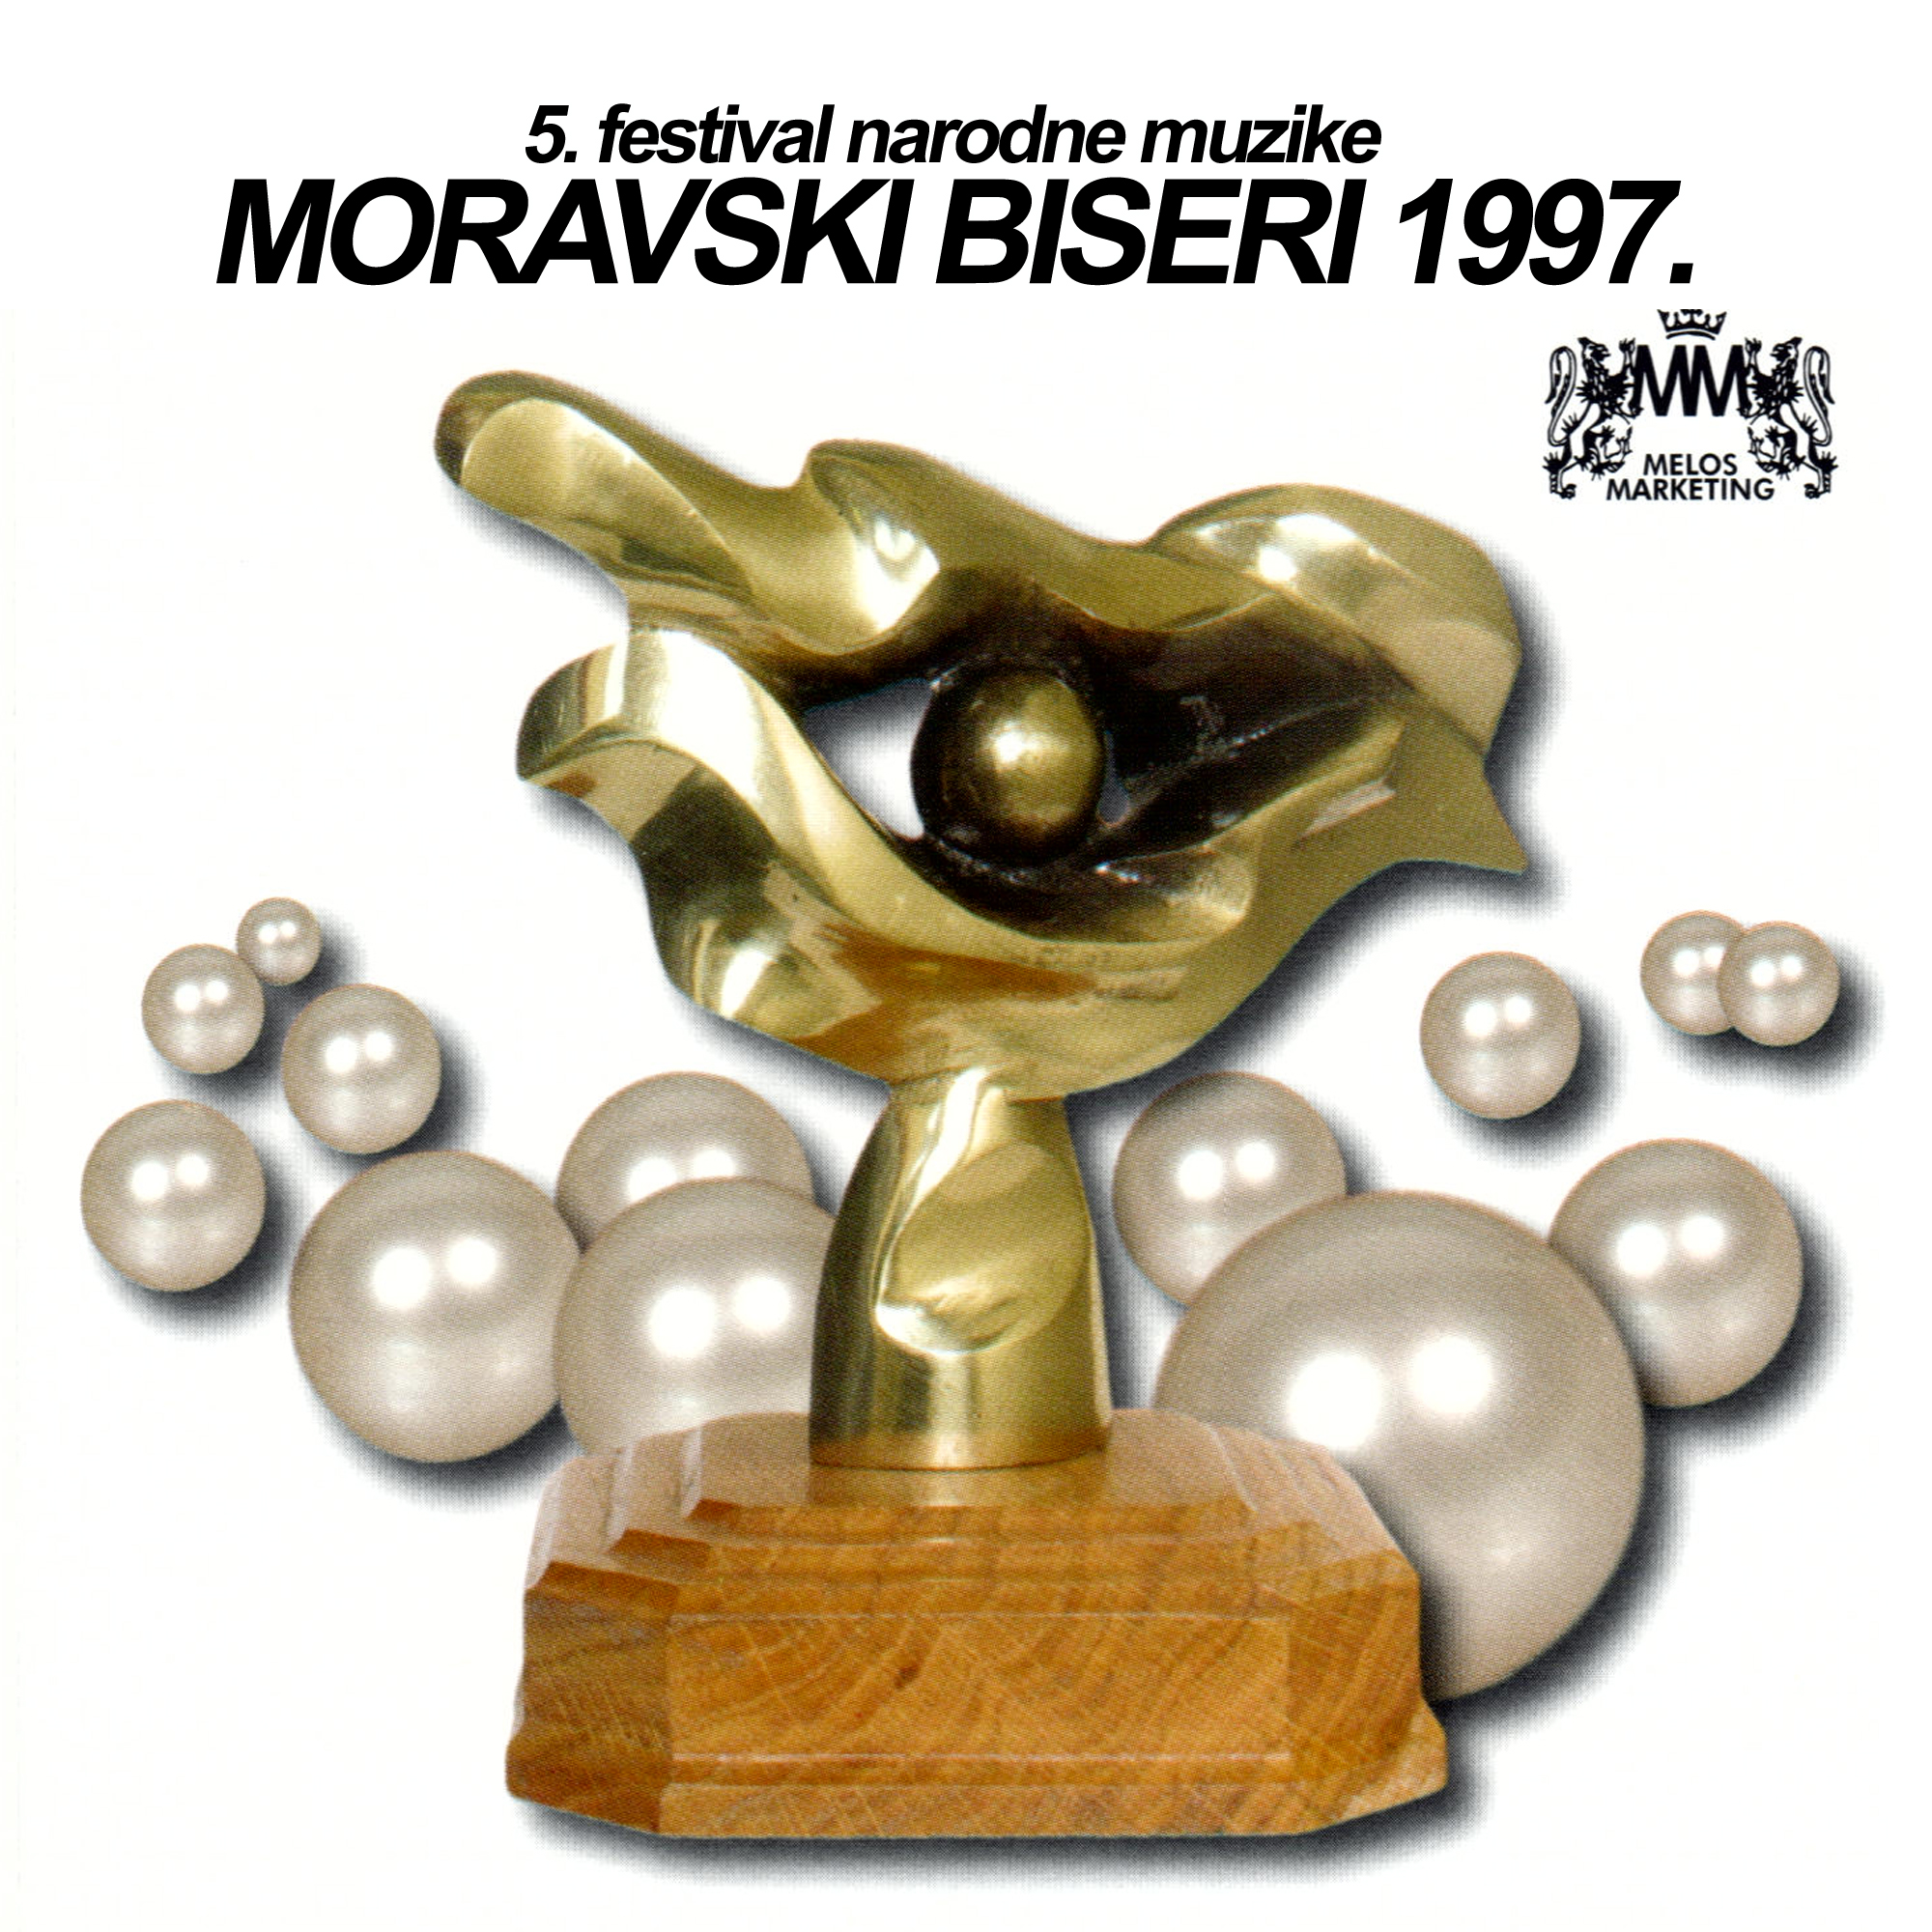 5. Festival narodne muzike MORAVSKI BISERI 1997